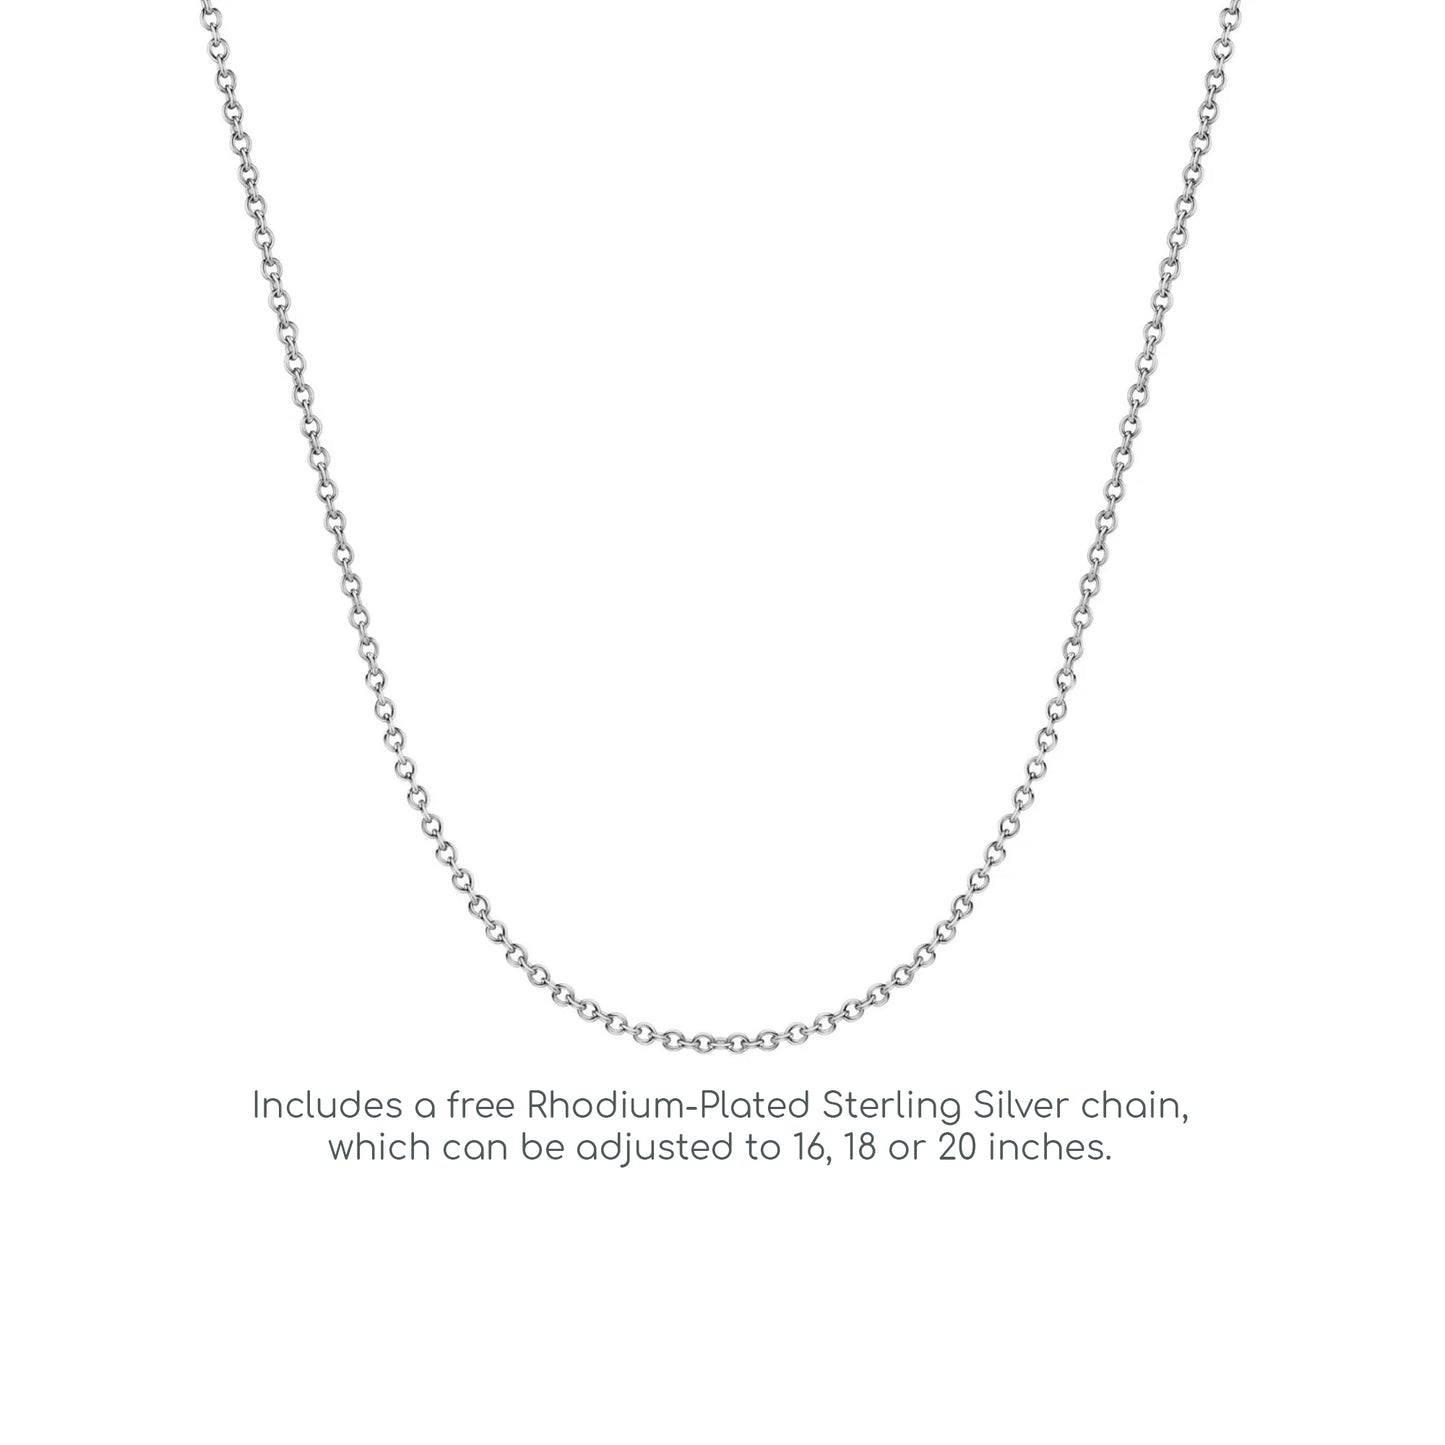 Silver  Arrowhead Cross Pendant Necklace 18 inch - GVX053